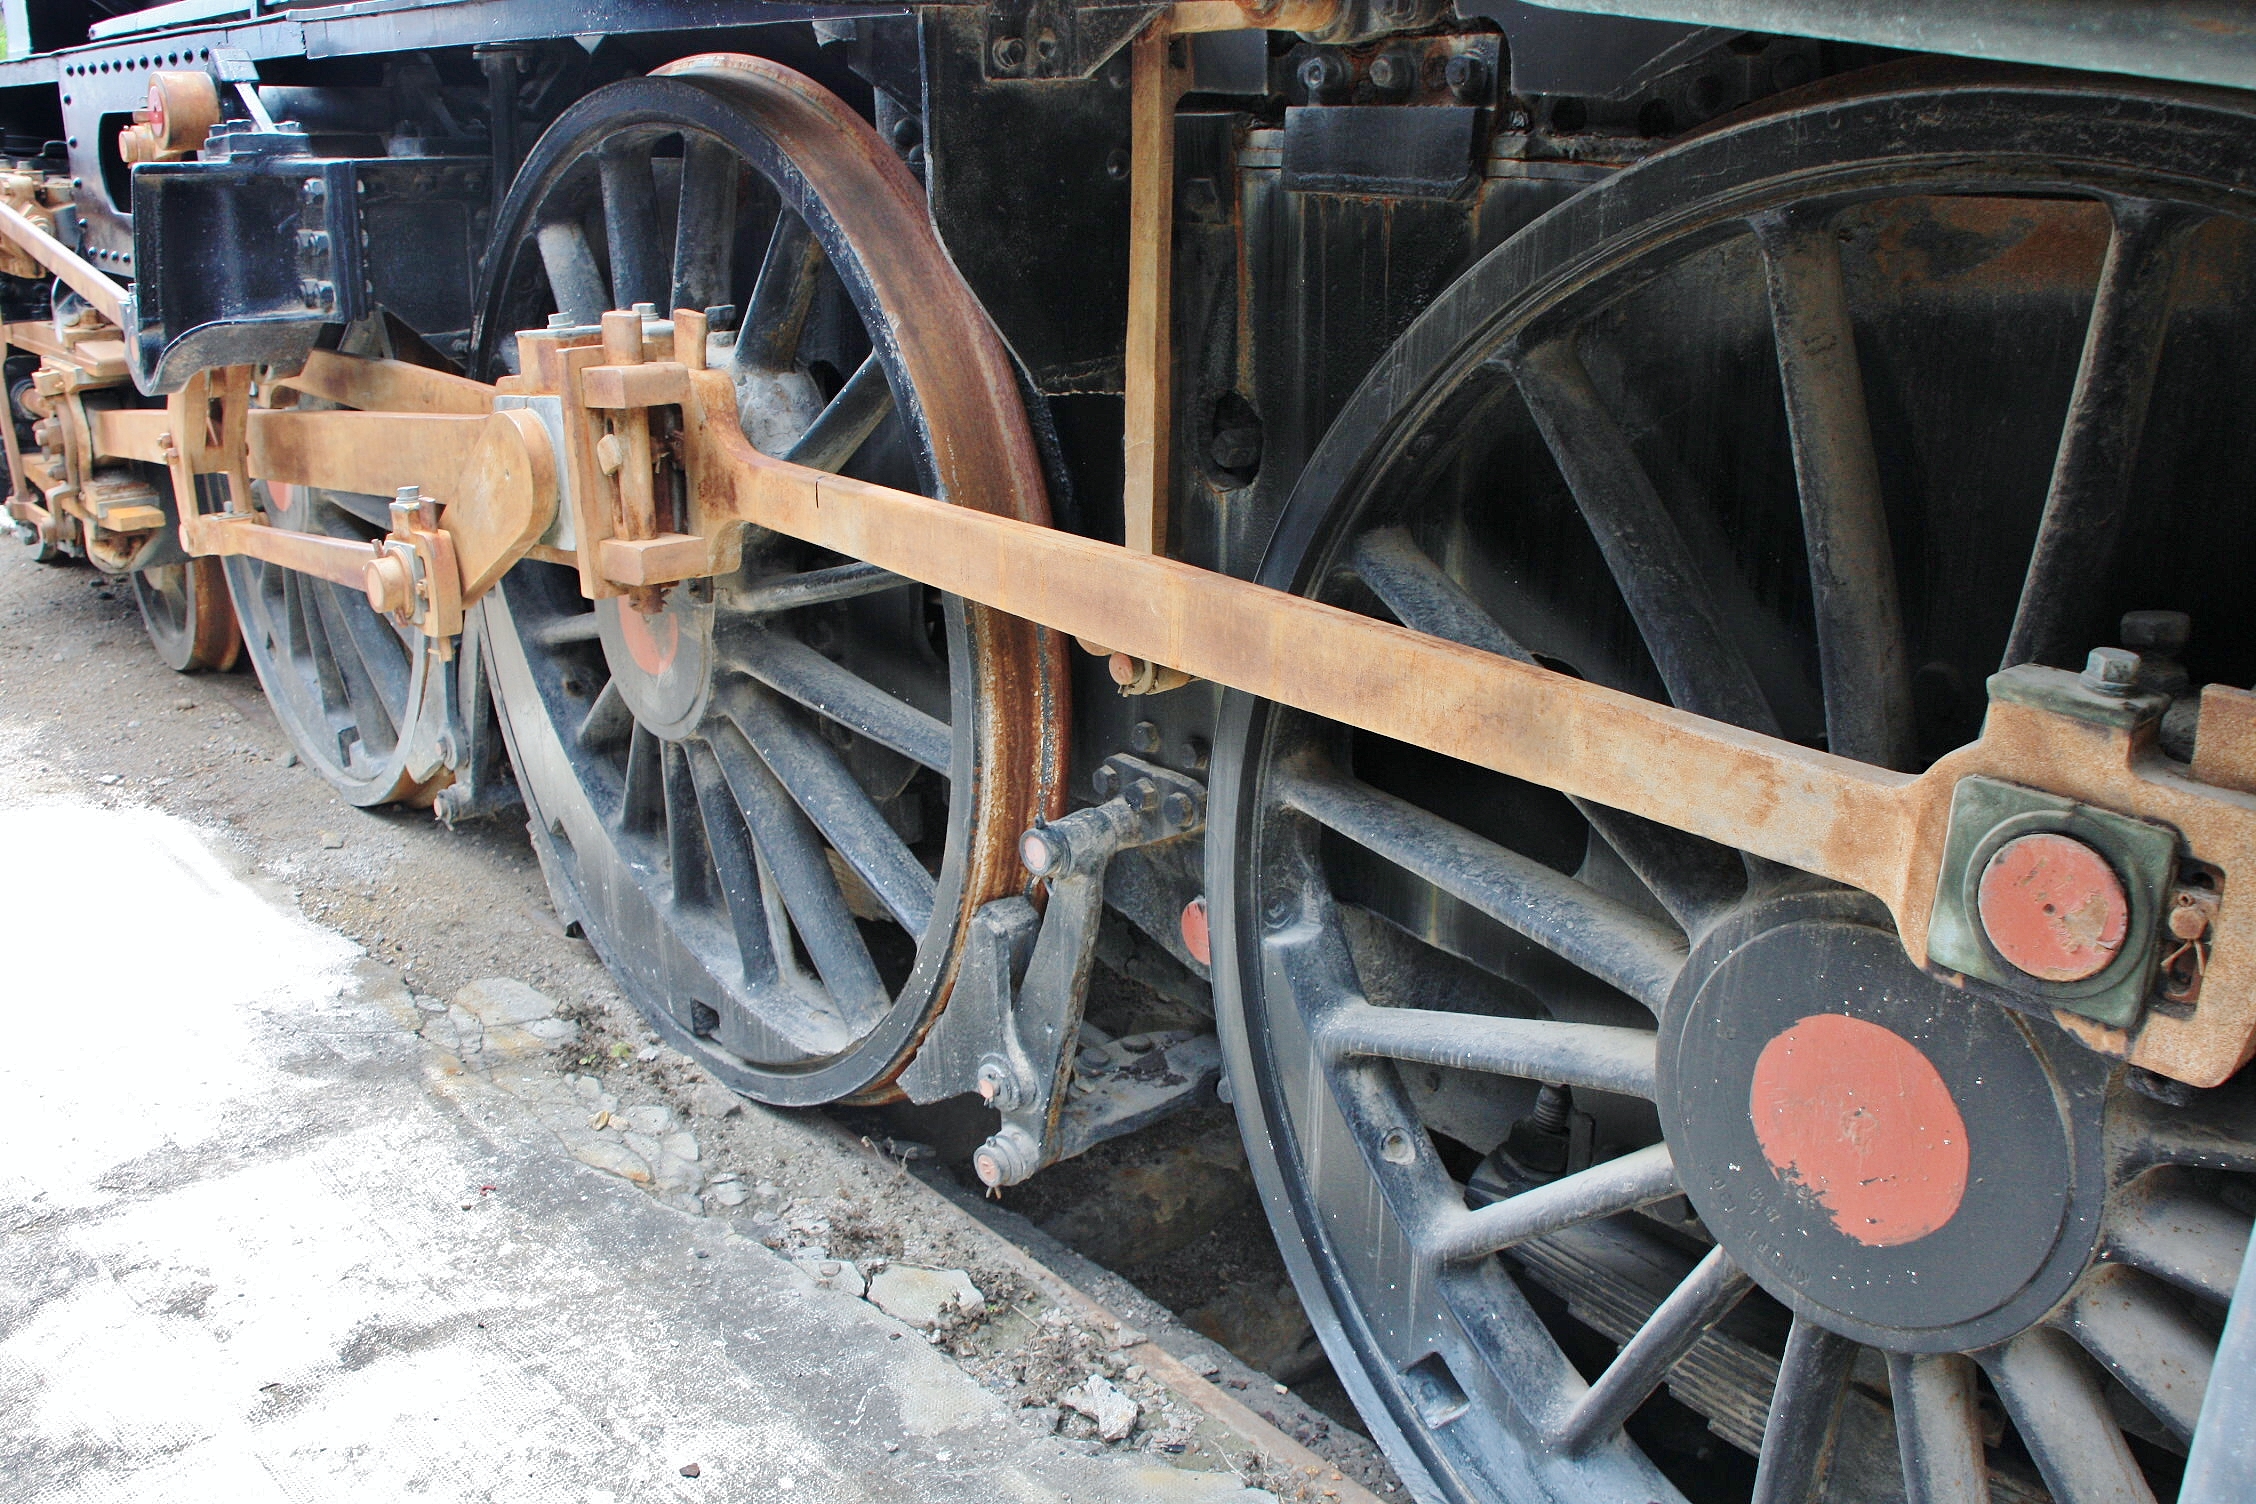 Foto: Museo del Ferrocarril - Vilanova i la Geltrú (Barcelona), España